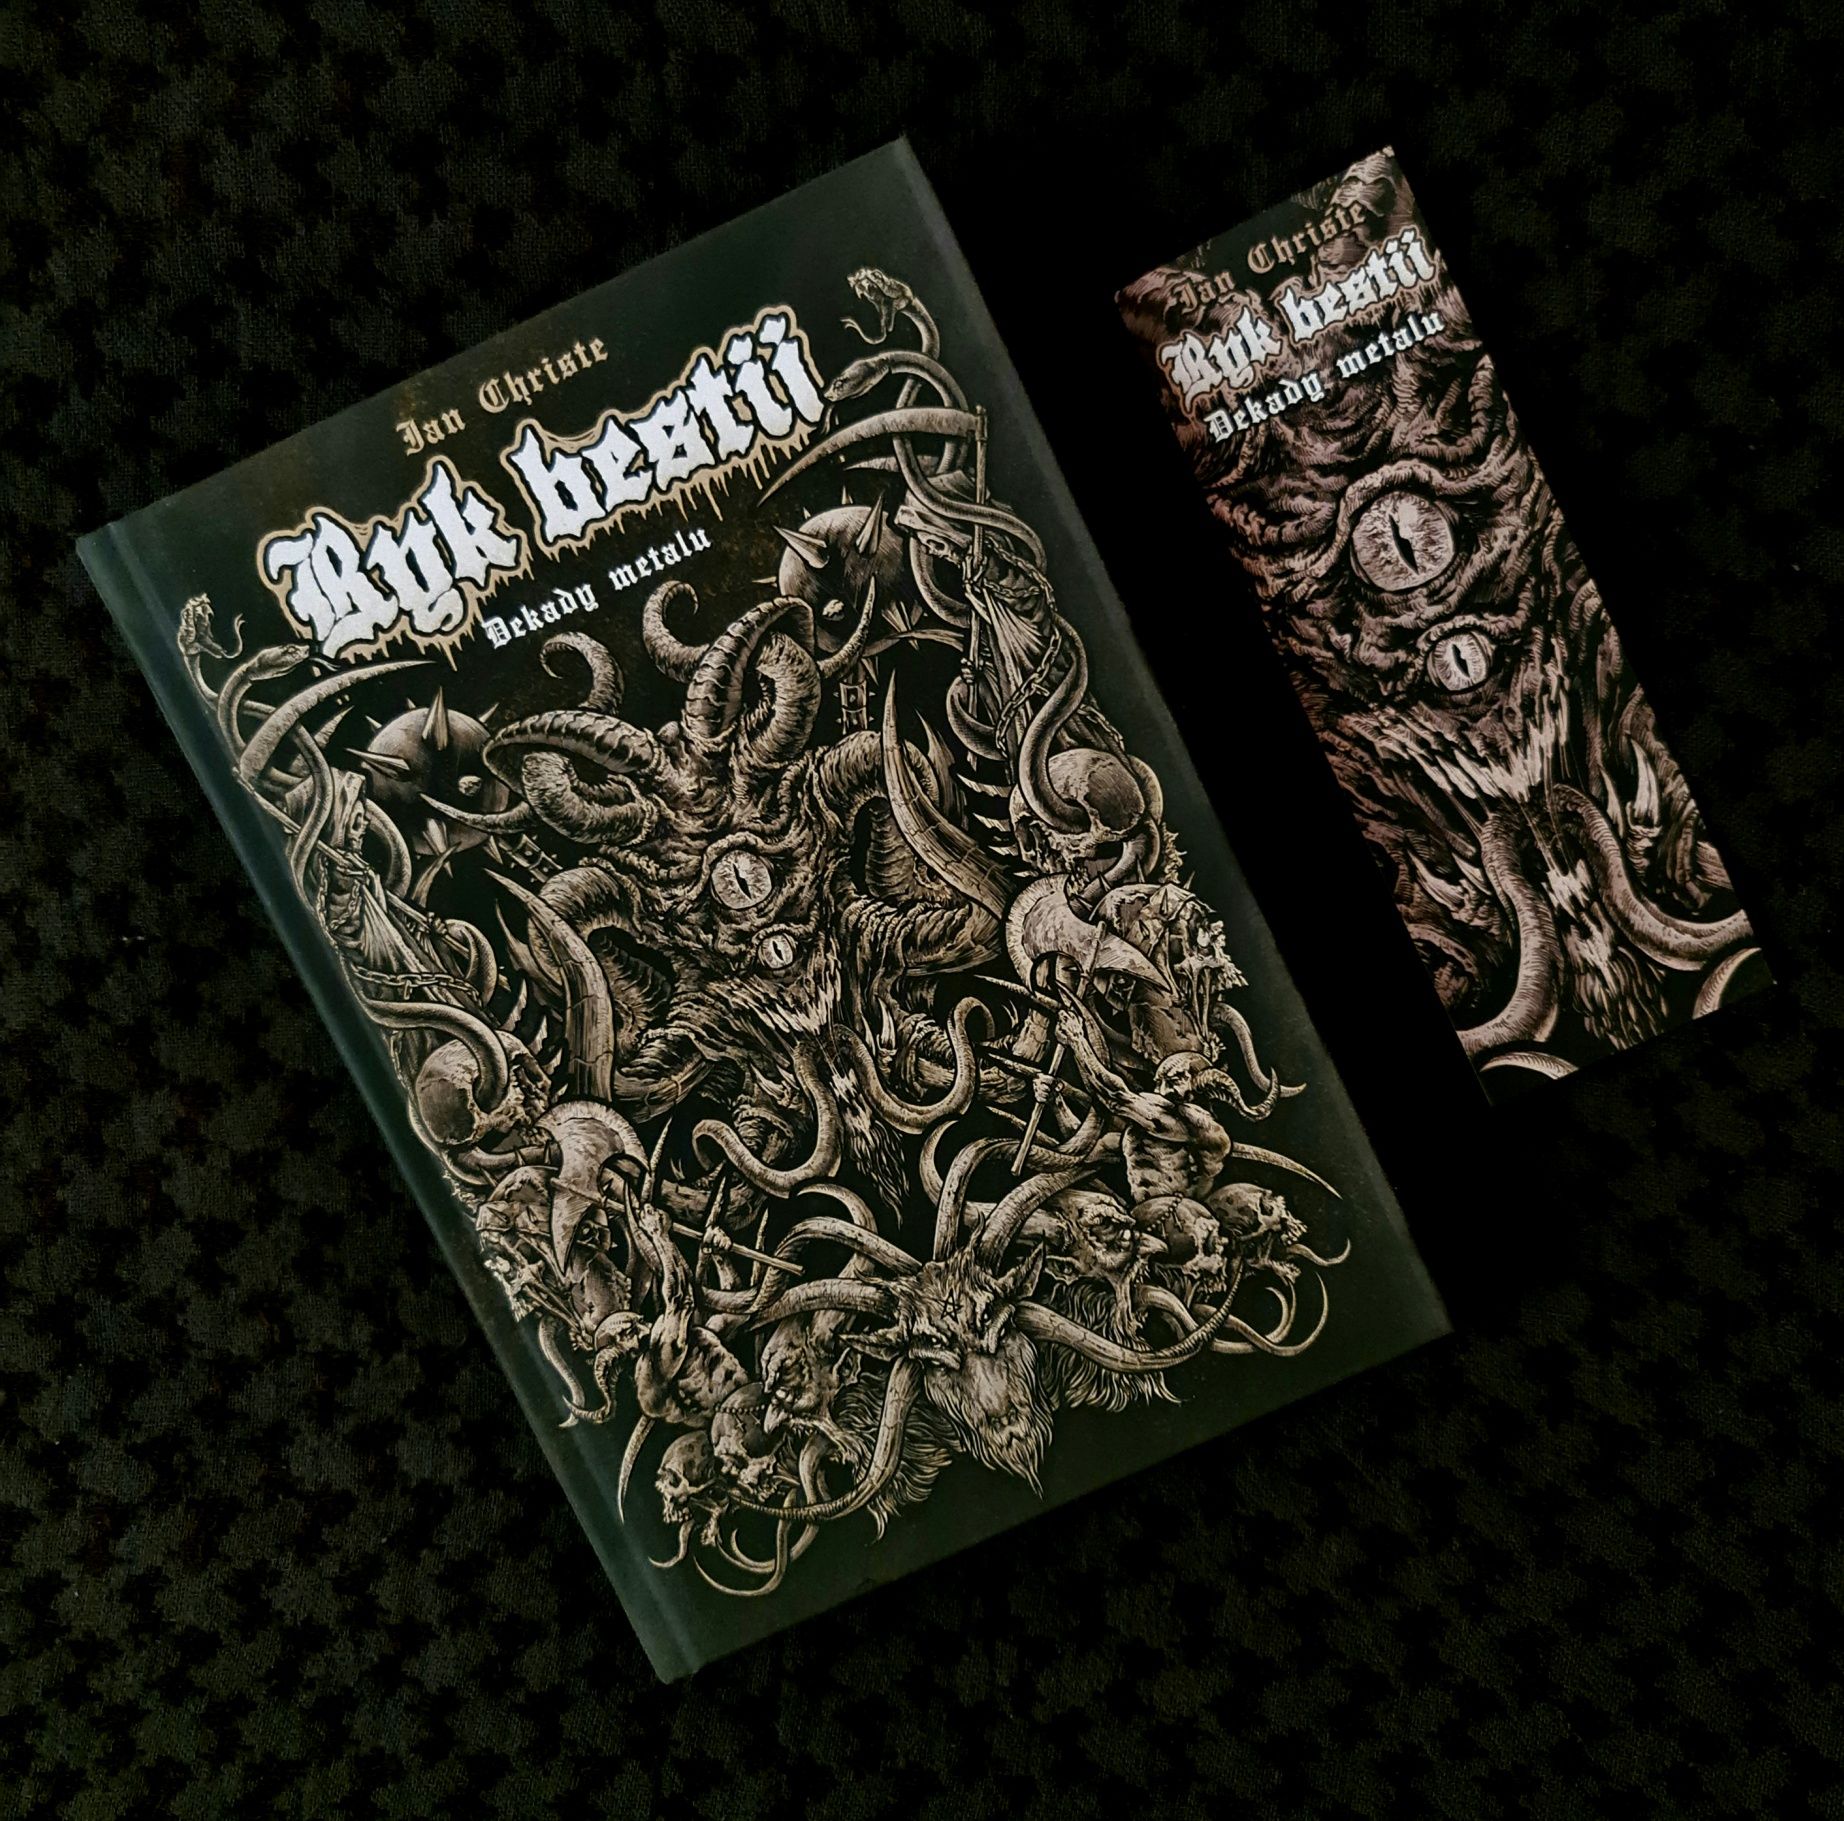 Książka Ryk Bestii "Dekady Metalu" Ian Christe